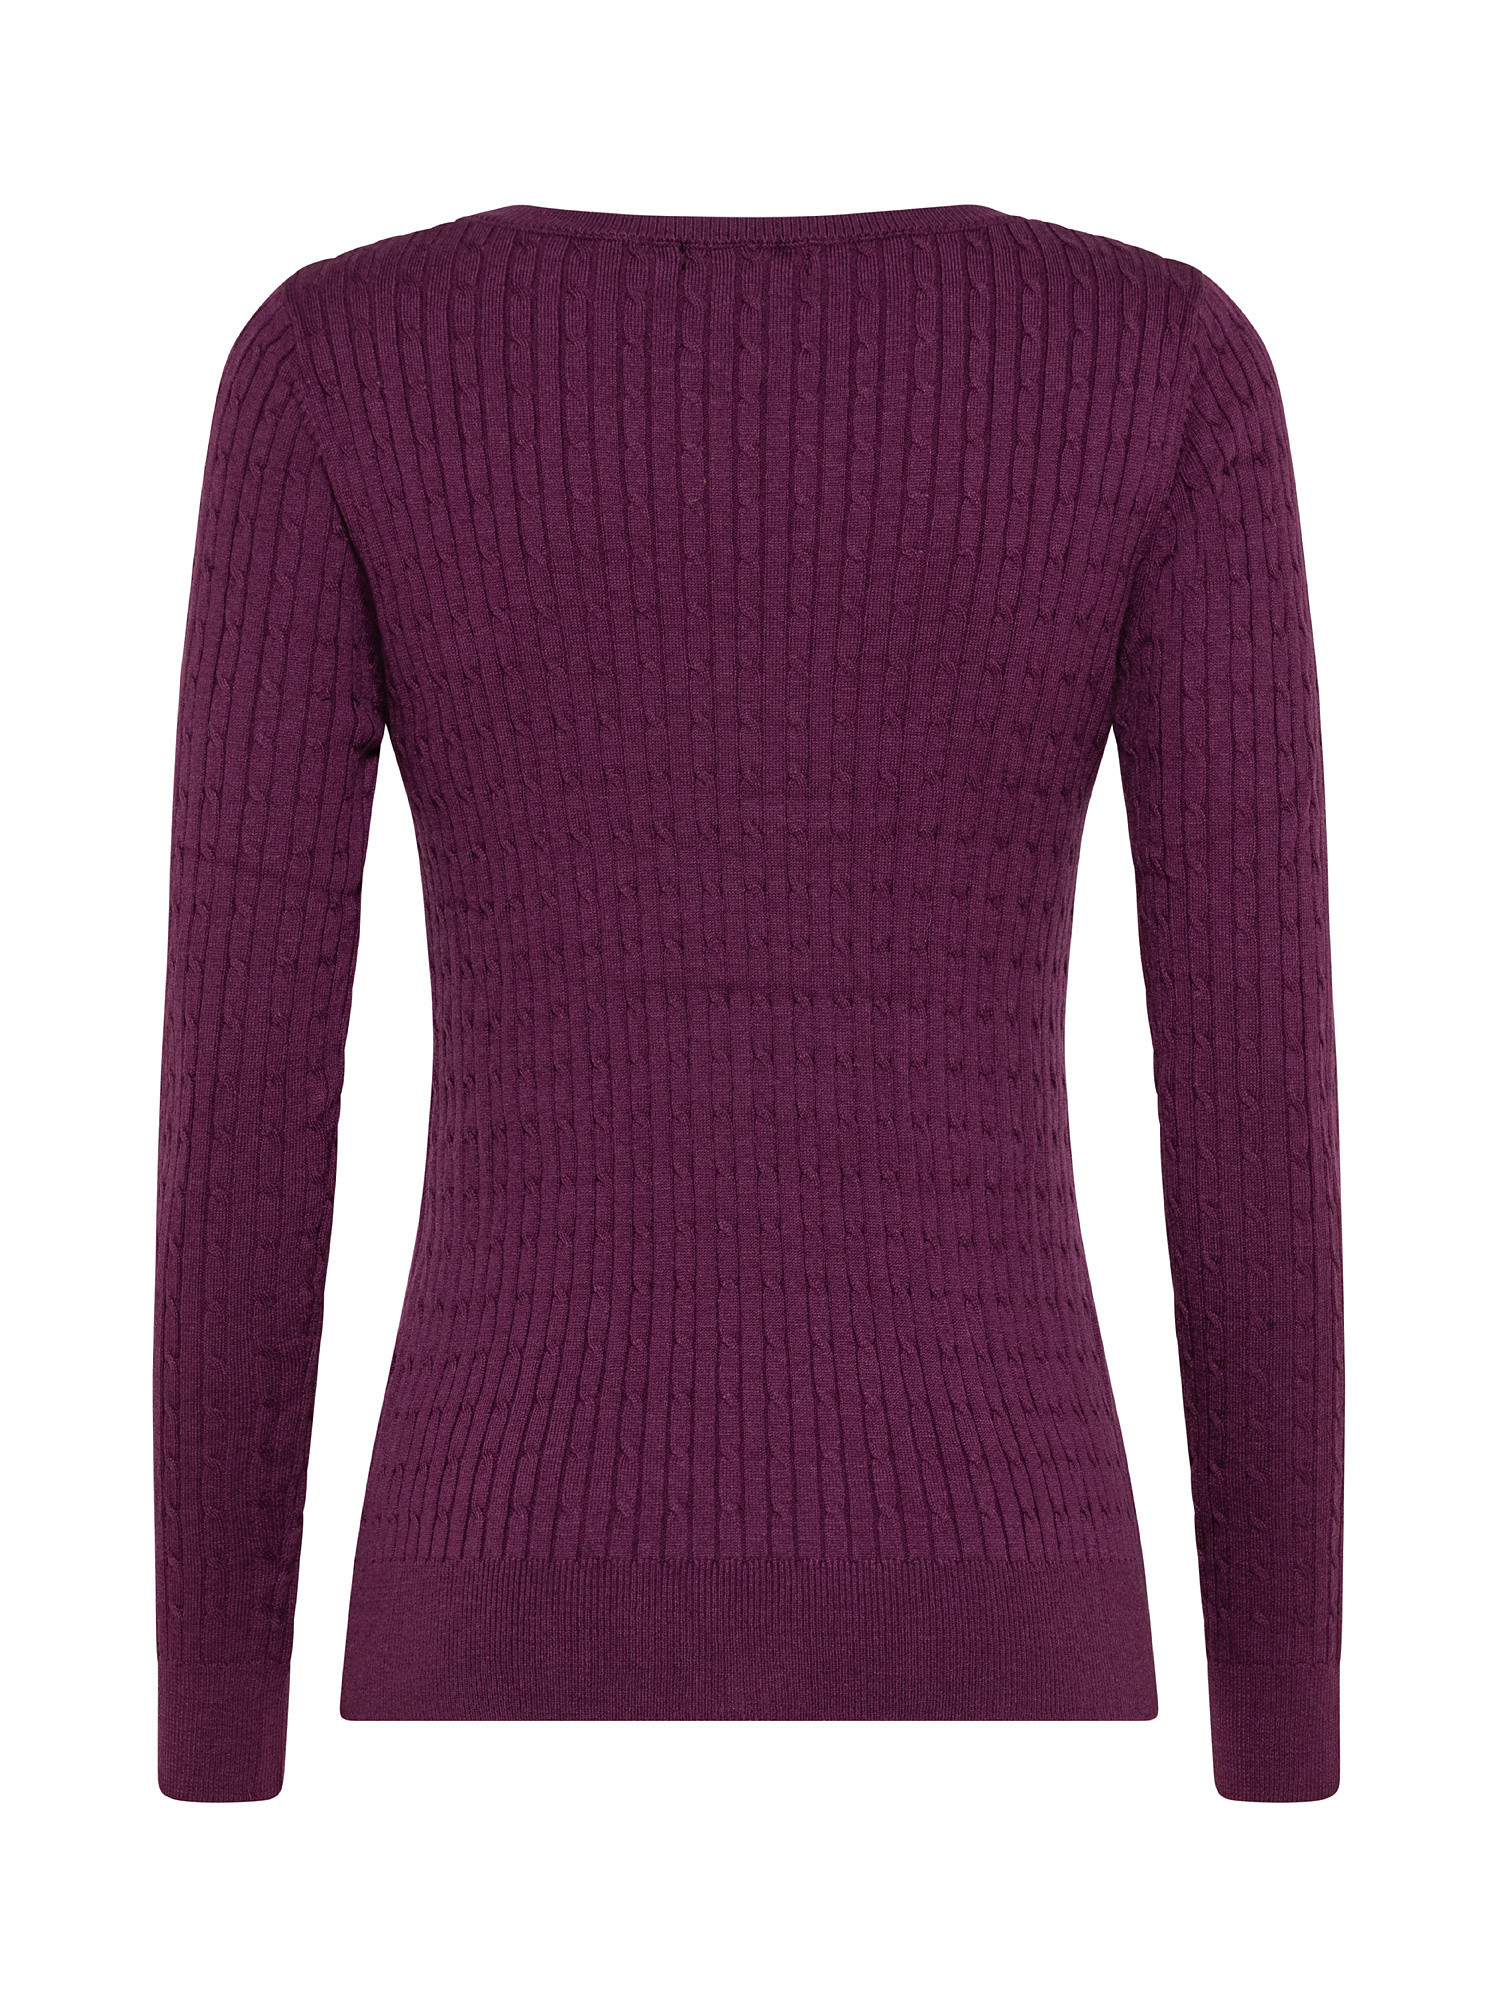 Crewneck knit pullover, Purple, large image number 1